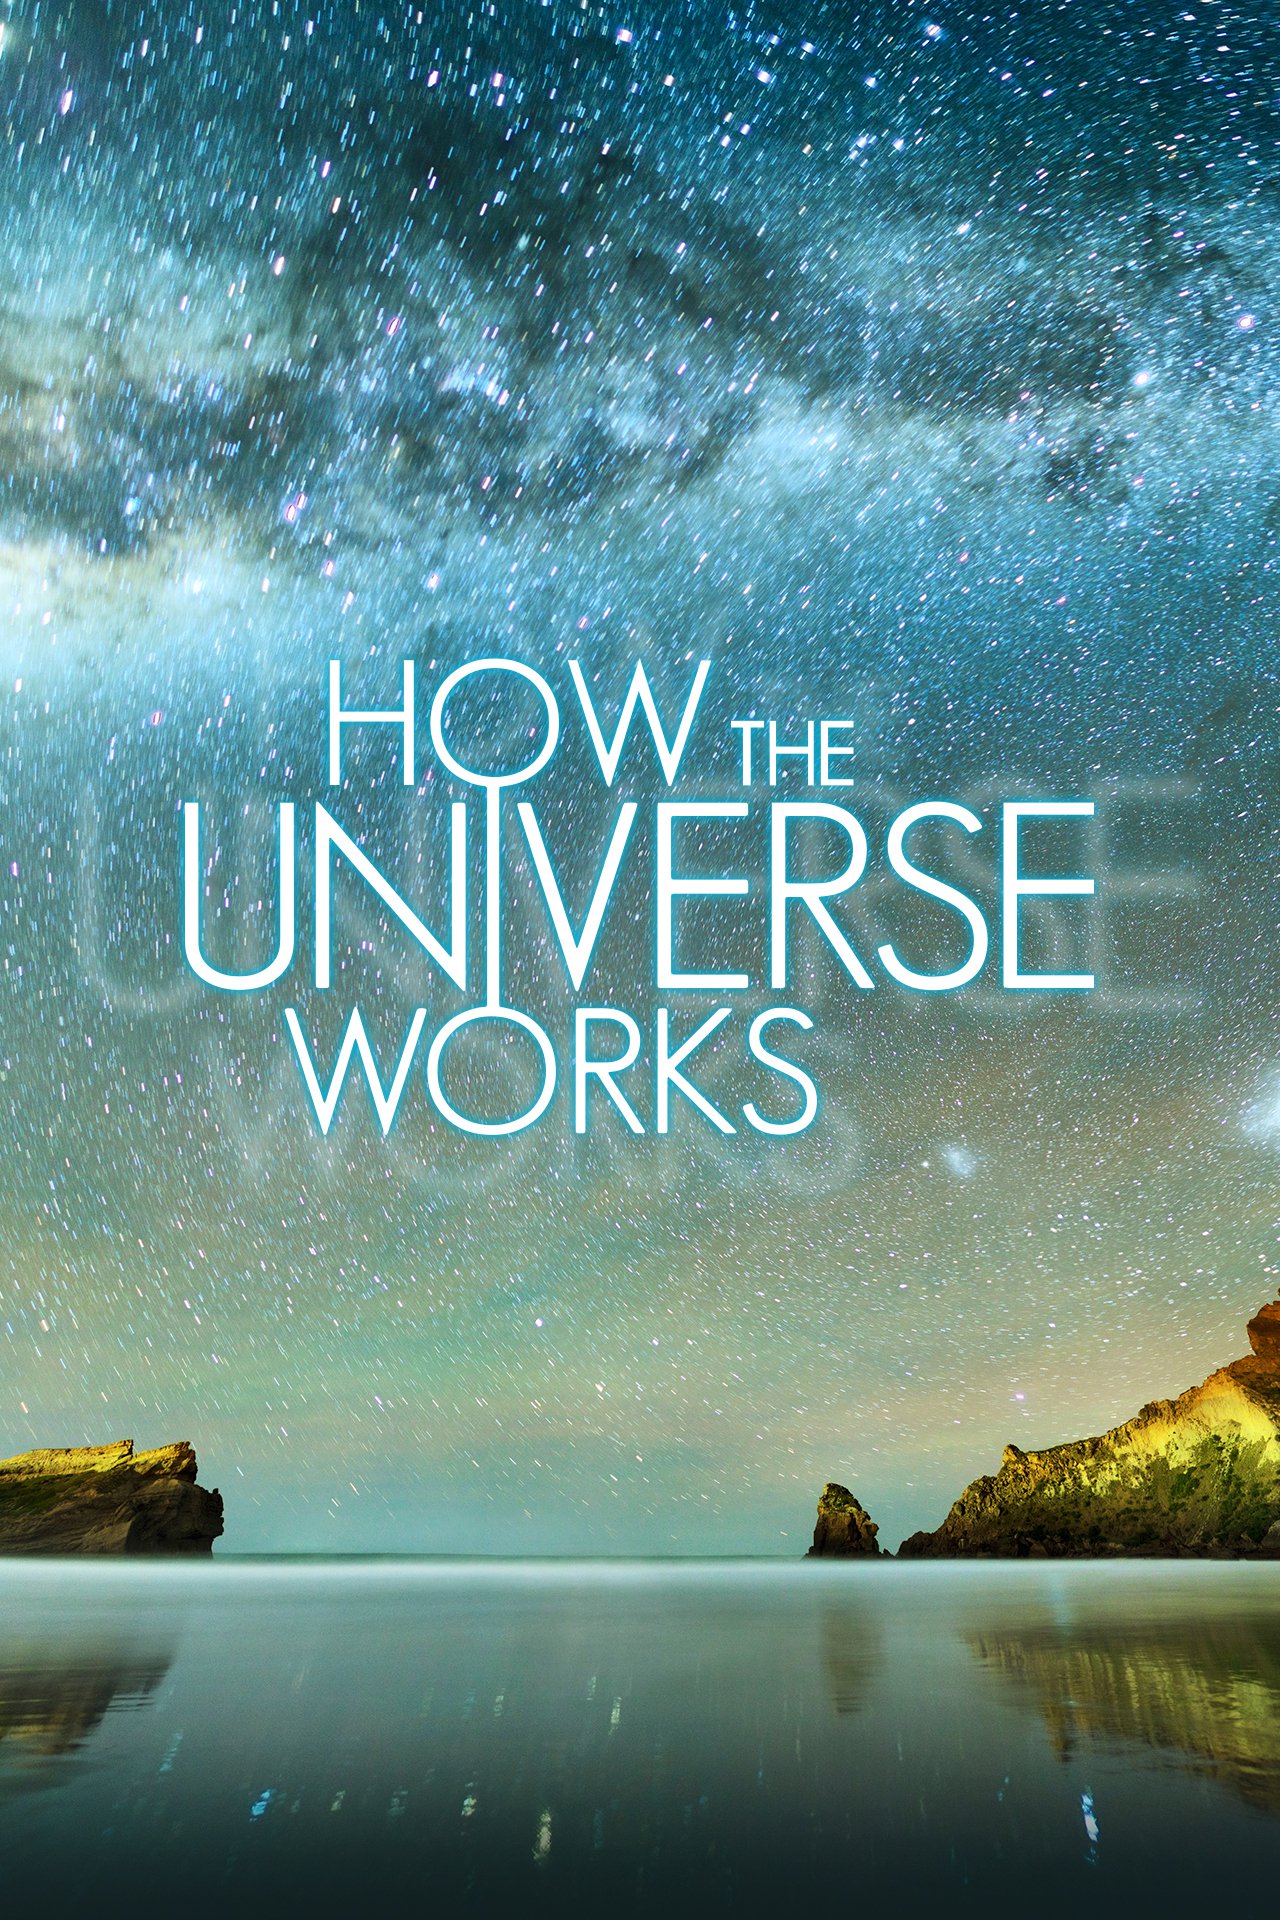 A big discover. Устроена Вселенная. Discovery. Как устроена Вселенная. How the Universe works. How the Universe works poster.